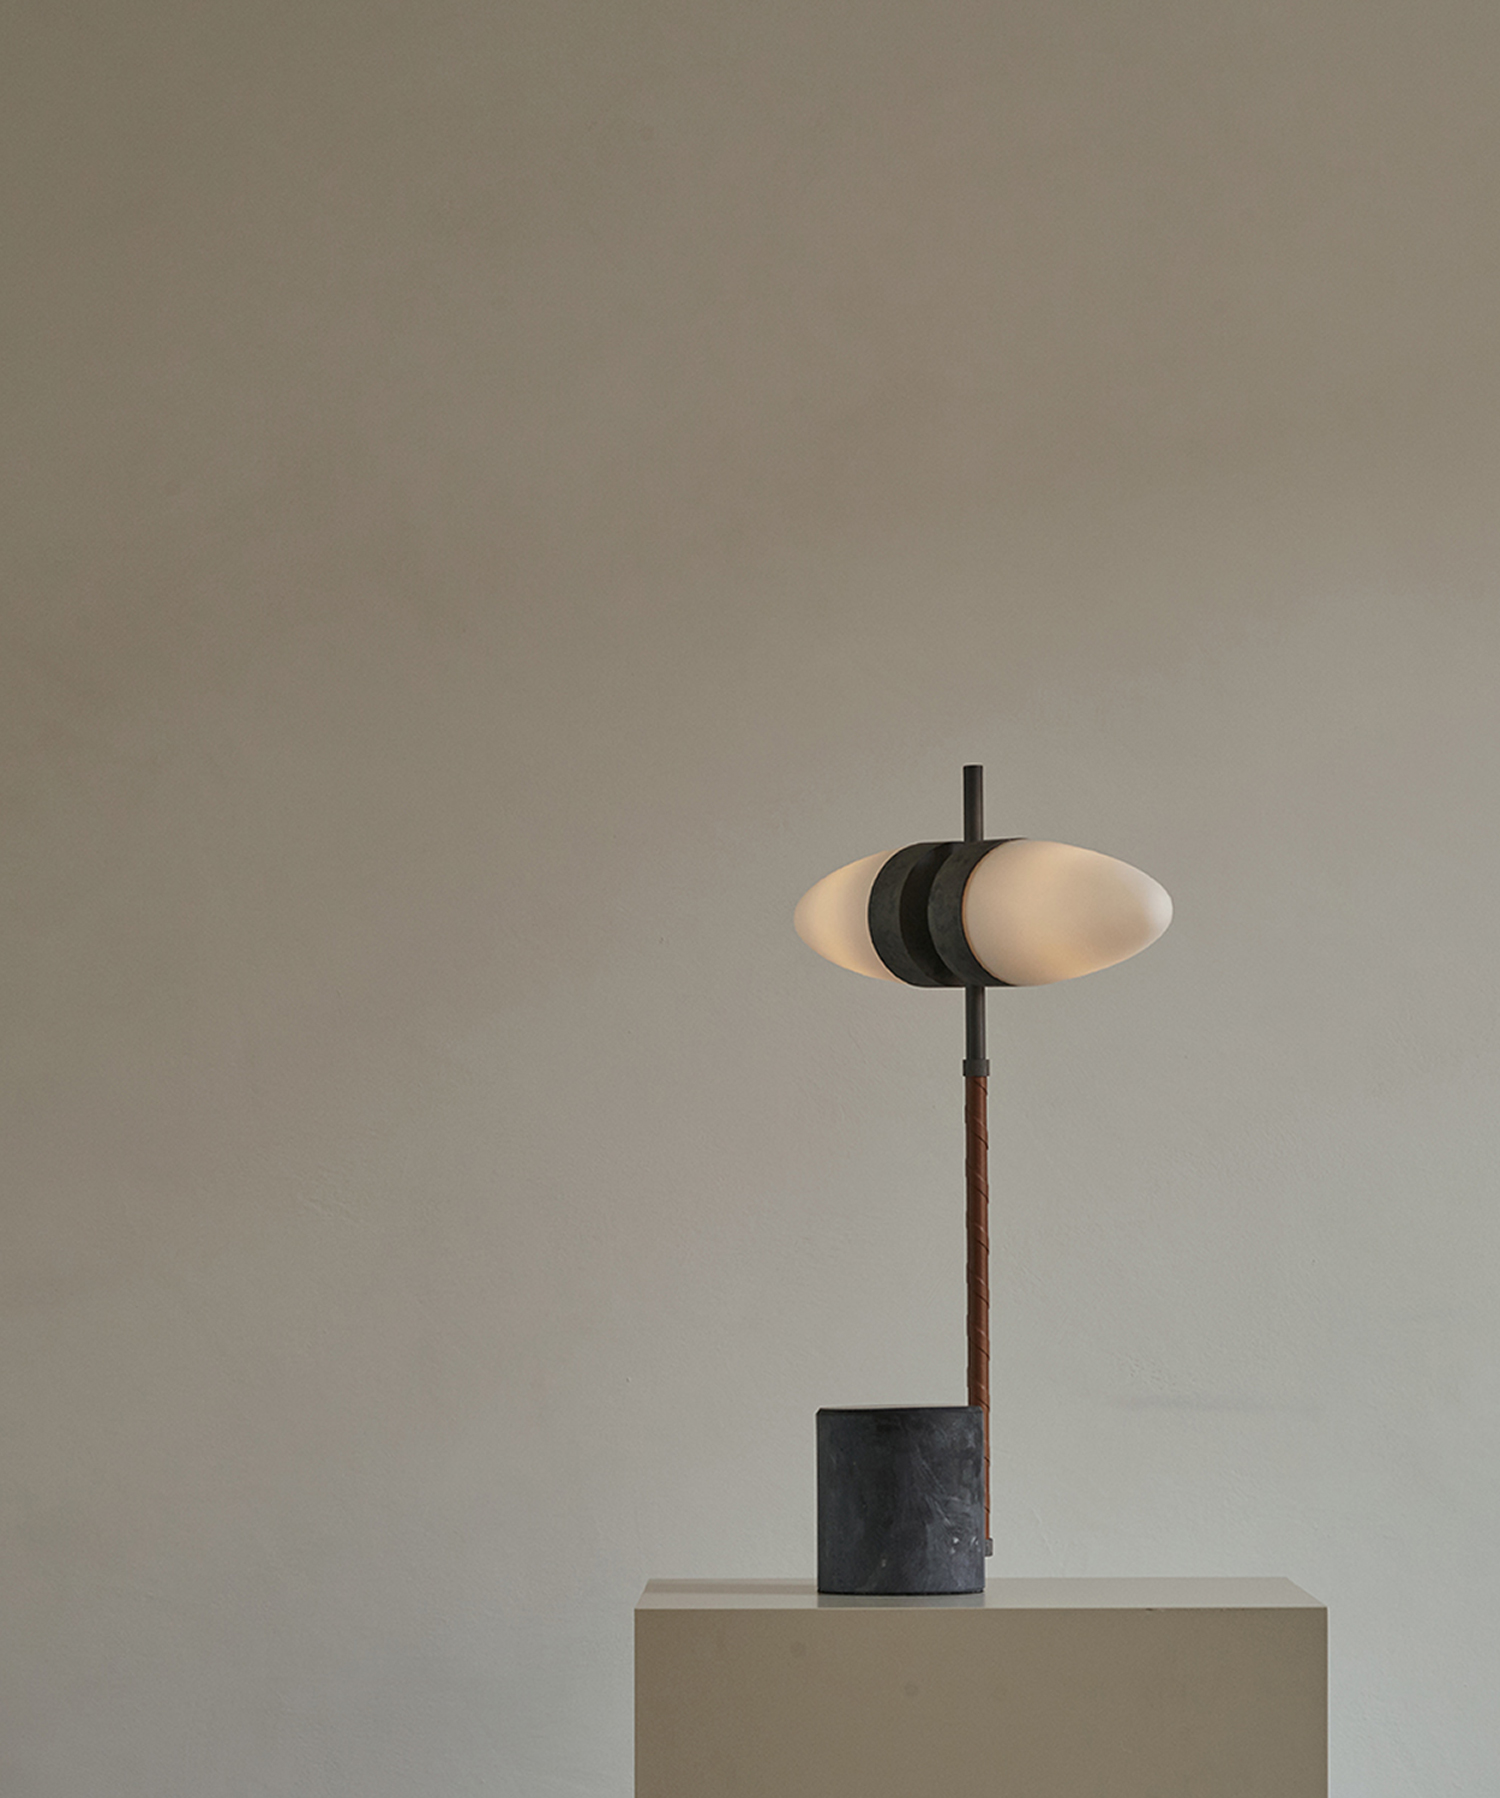 101 Copenhagen Oxidised Bull Floor Lamp with stand